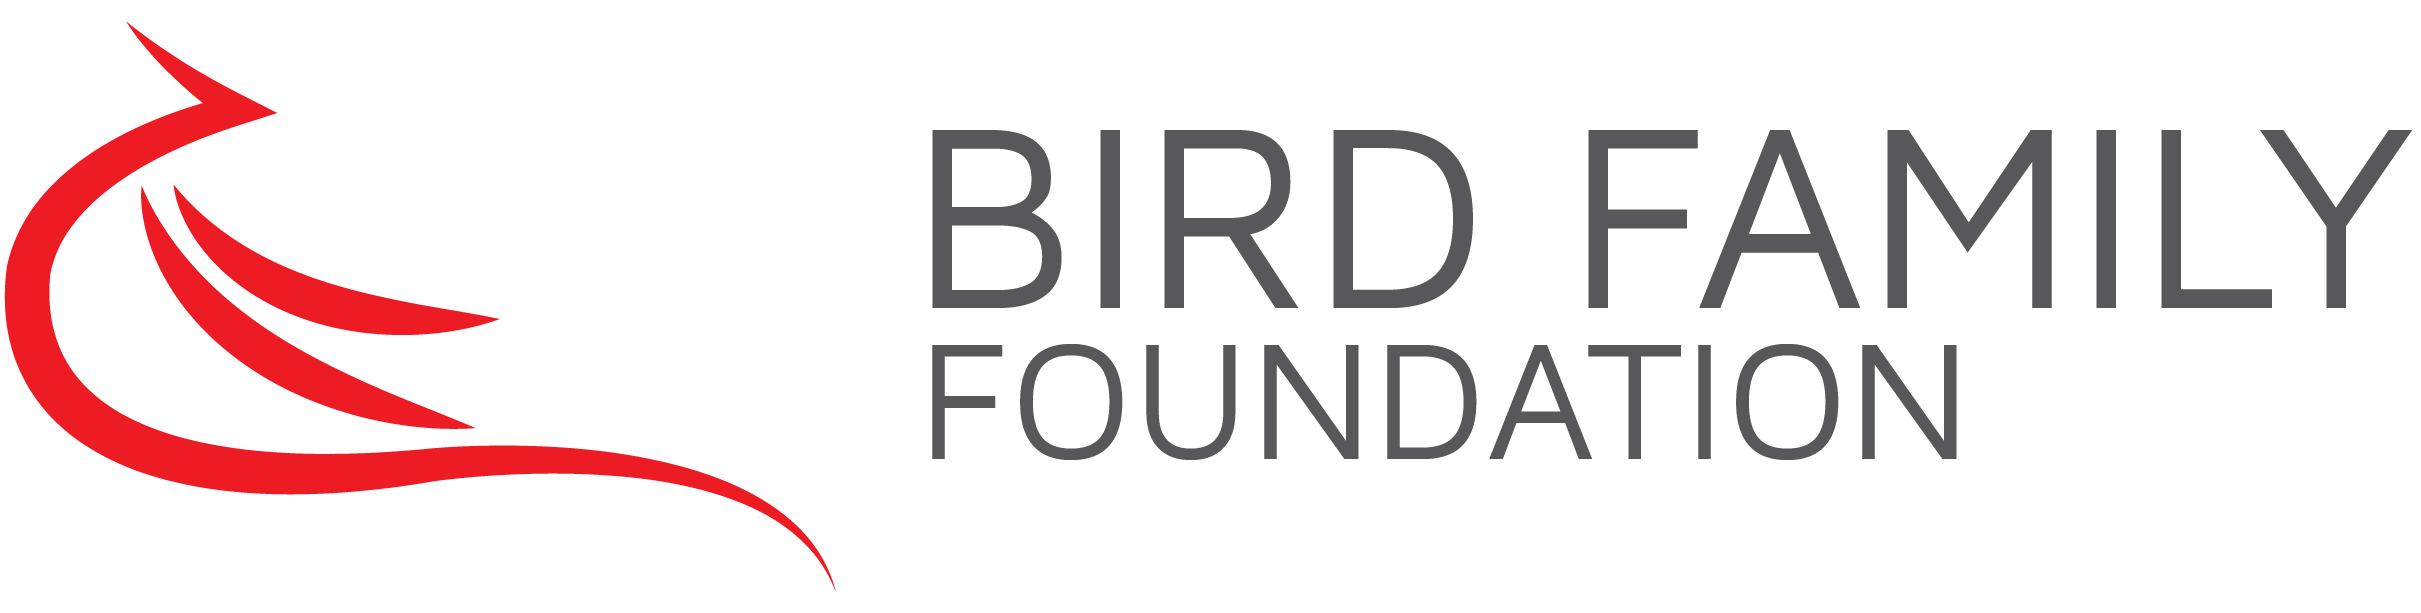 Bird Family Foundation